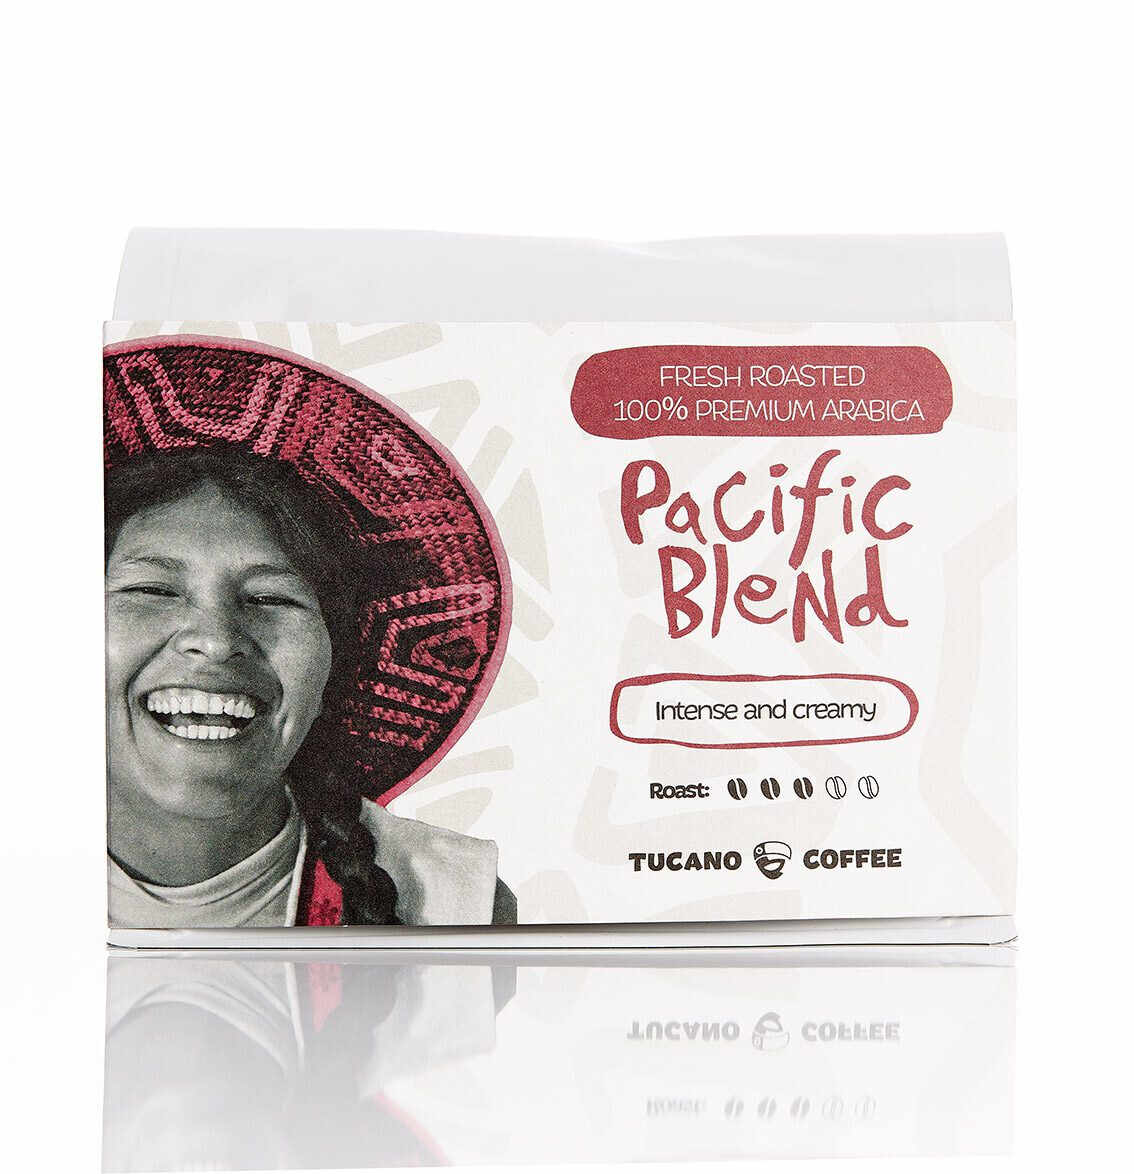 Tucano Coffee Pacific Blend cafea boabe 200g